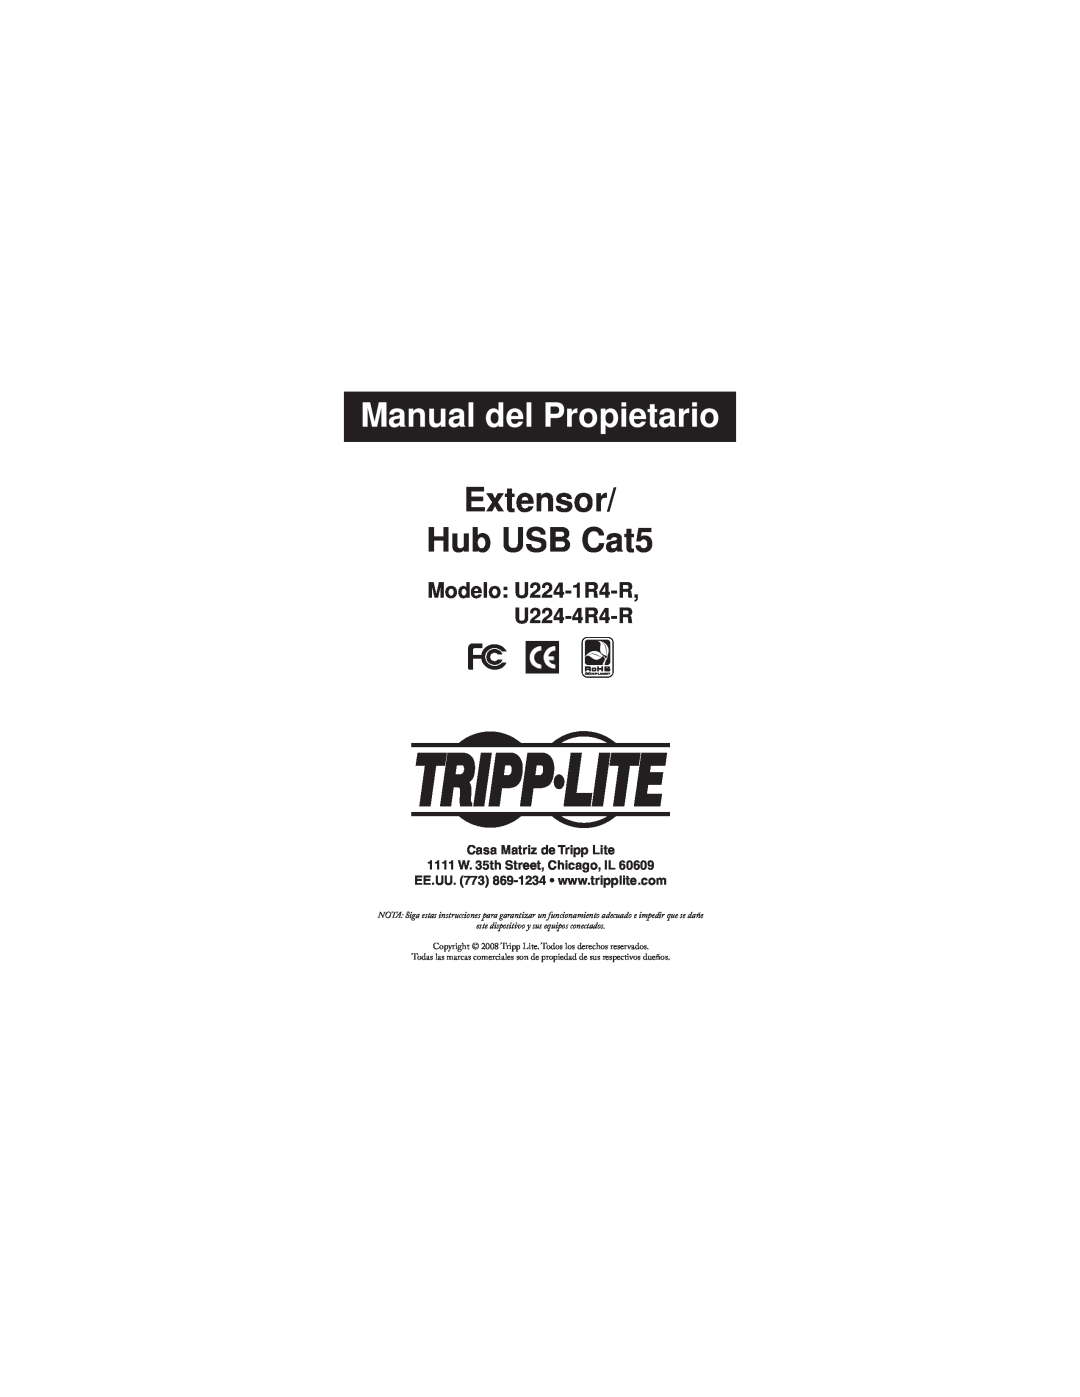 Tripp Lite owner manual Manual del Propietario, Extensor Hub USB Cat5, Modelo U224-1R4-R U224-4R4-R 